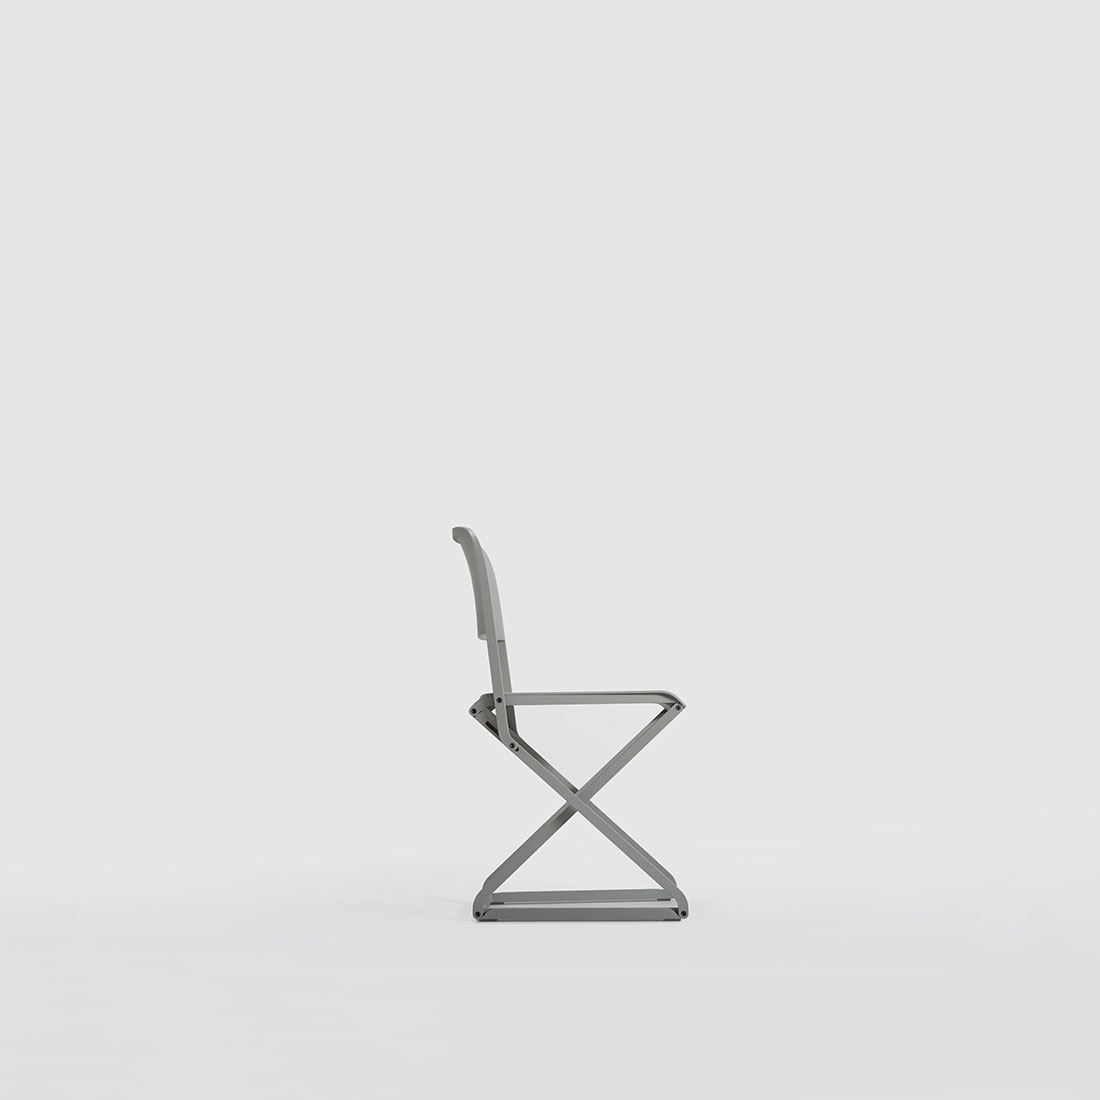 Minimalist Folding Chair "DFC" by Simon Frambach